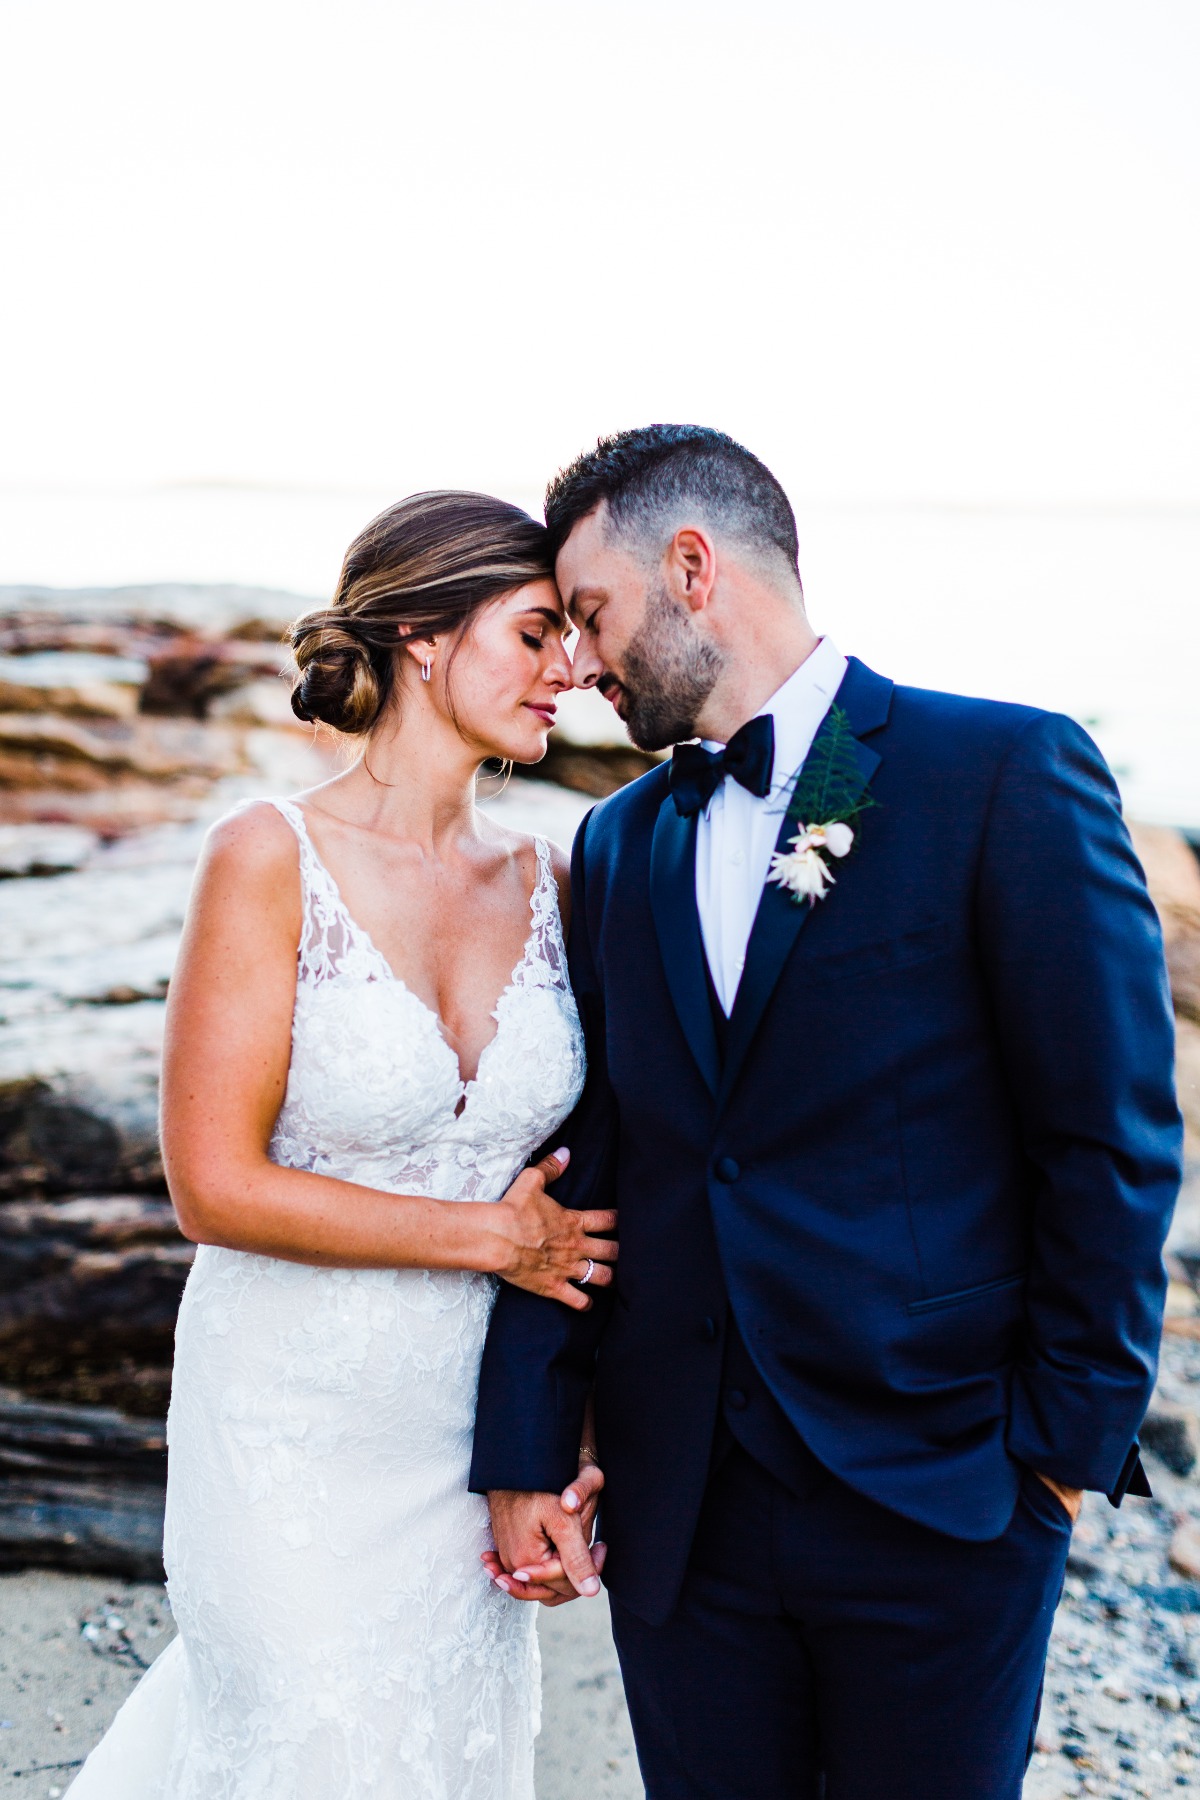 This Coastal Wedding In Maine Is A Boho Dream Come True